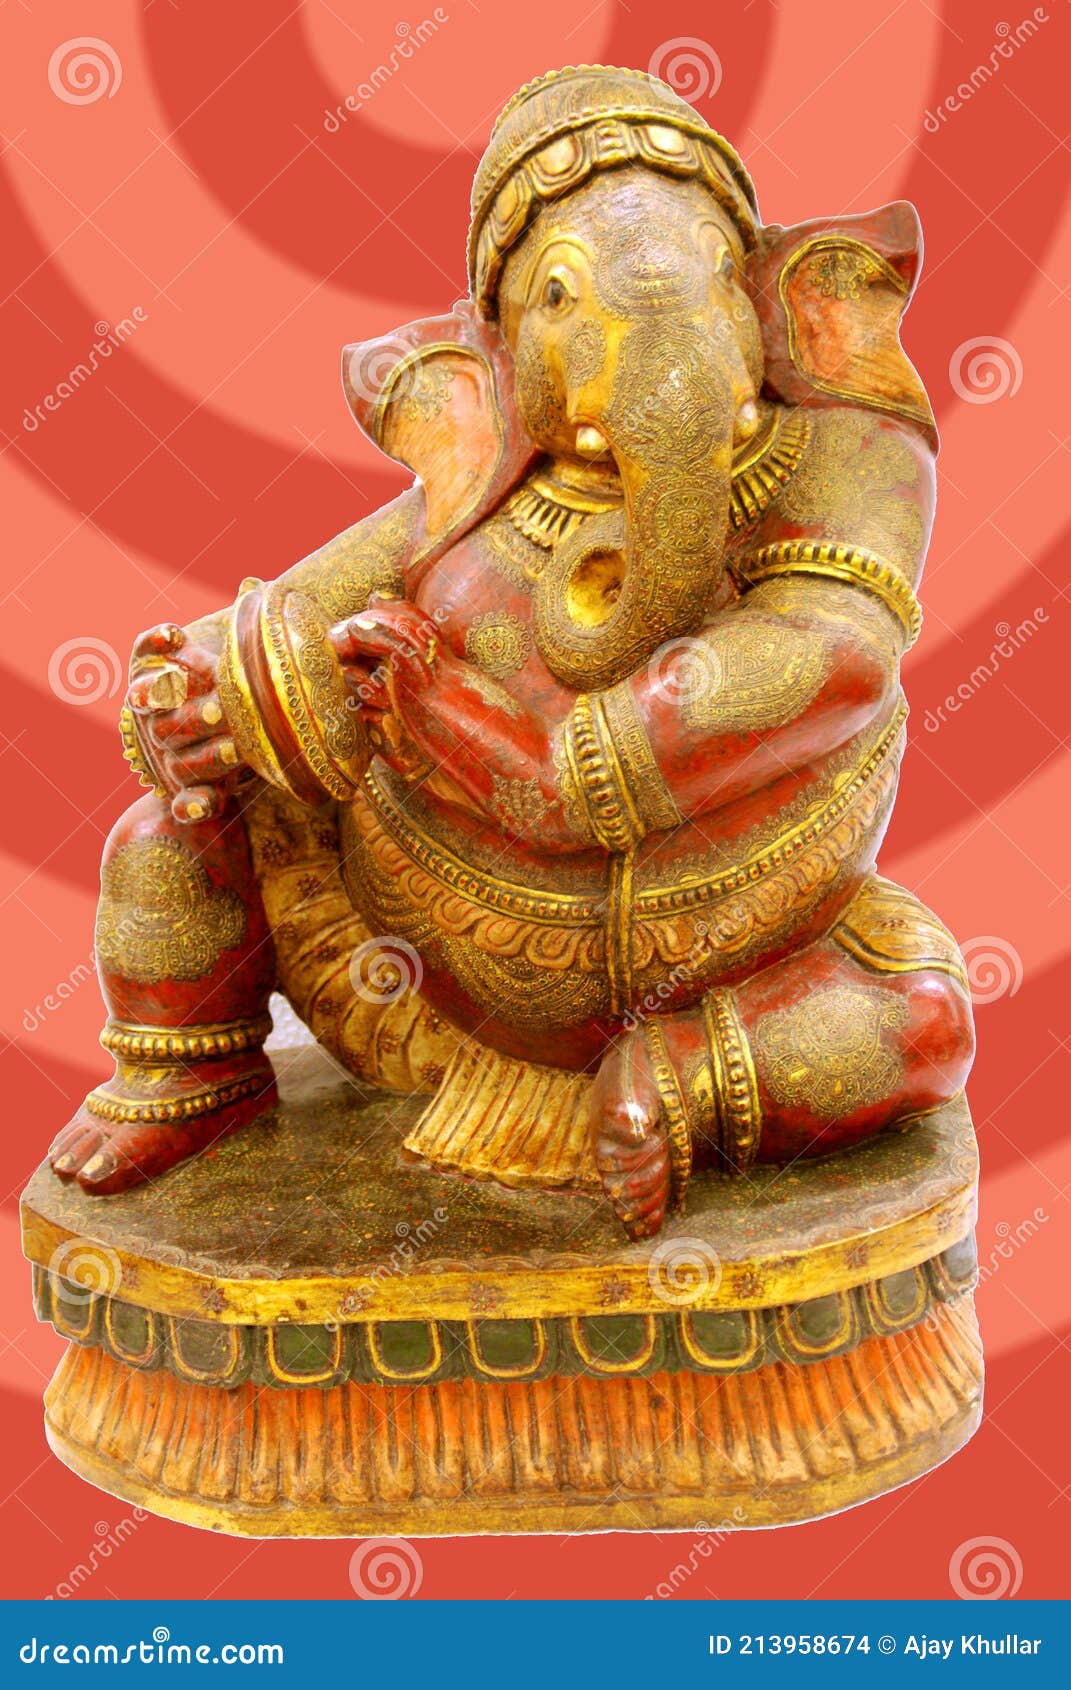 The Hindu God Ganesha Statue Stock Photo - Image of detail, city ...